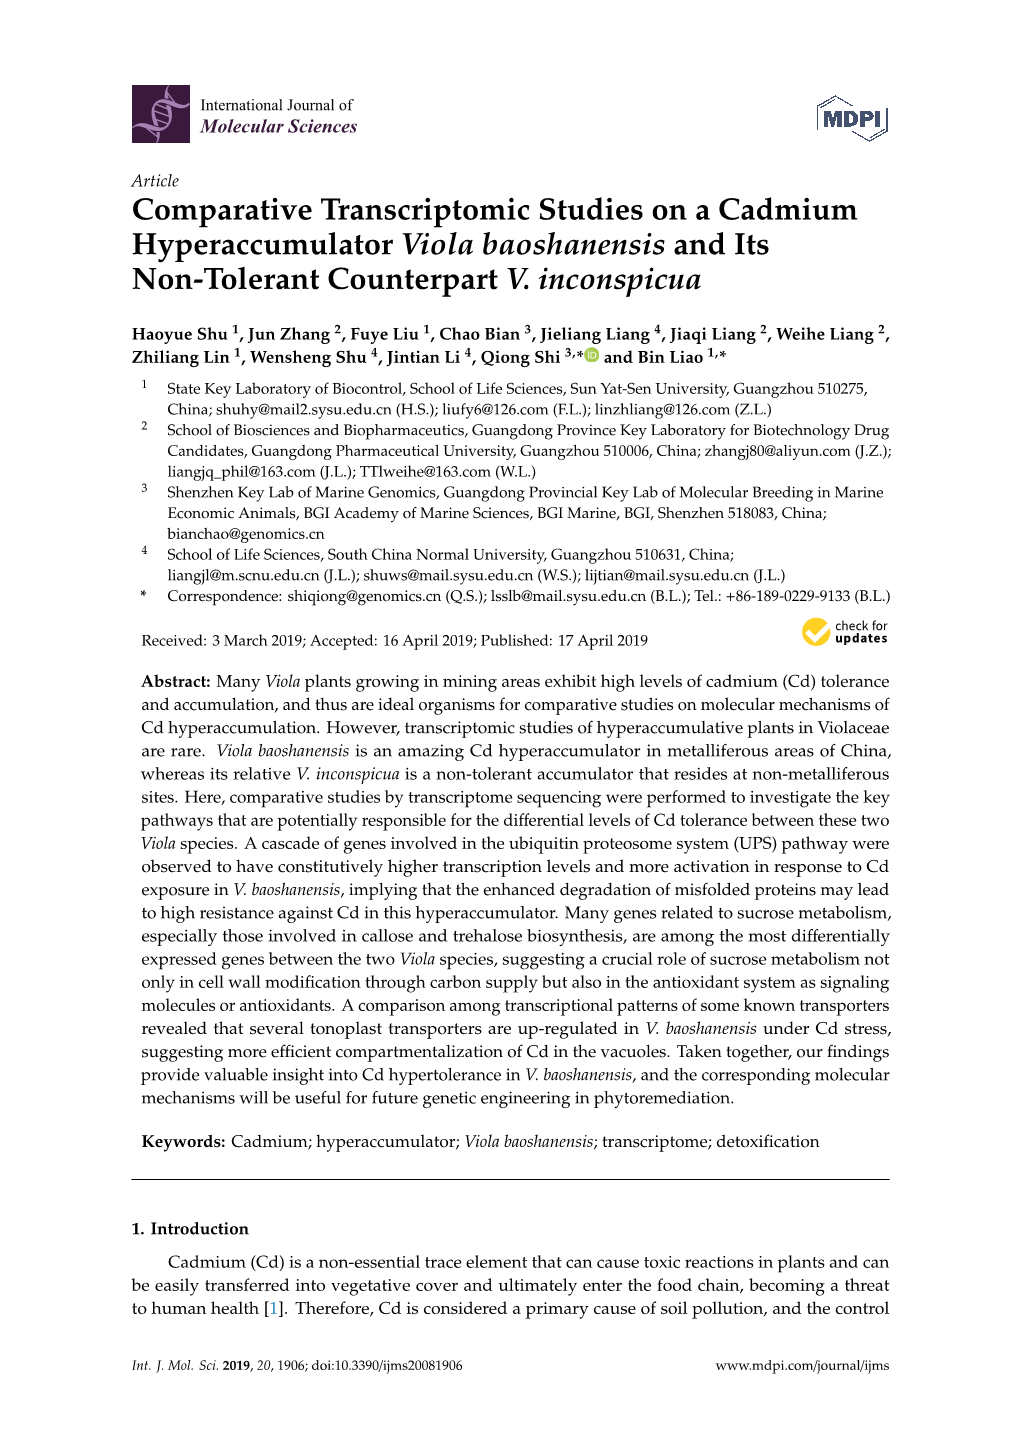 Comparative Transcriptomic Studies on a Cadmium Hyperaccumulator Viola Baoshanensis and Its Non-Tolerant Counterpart V